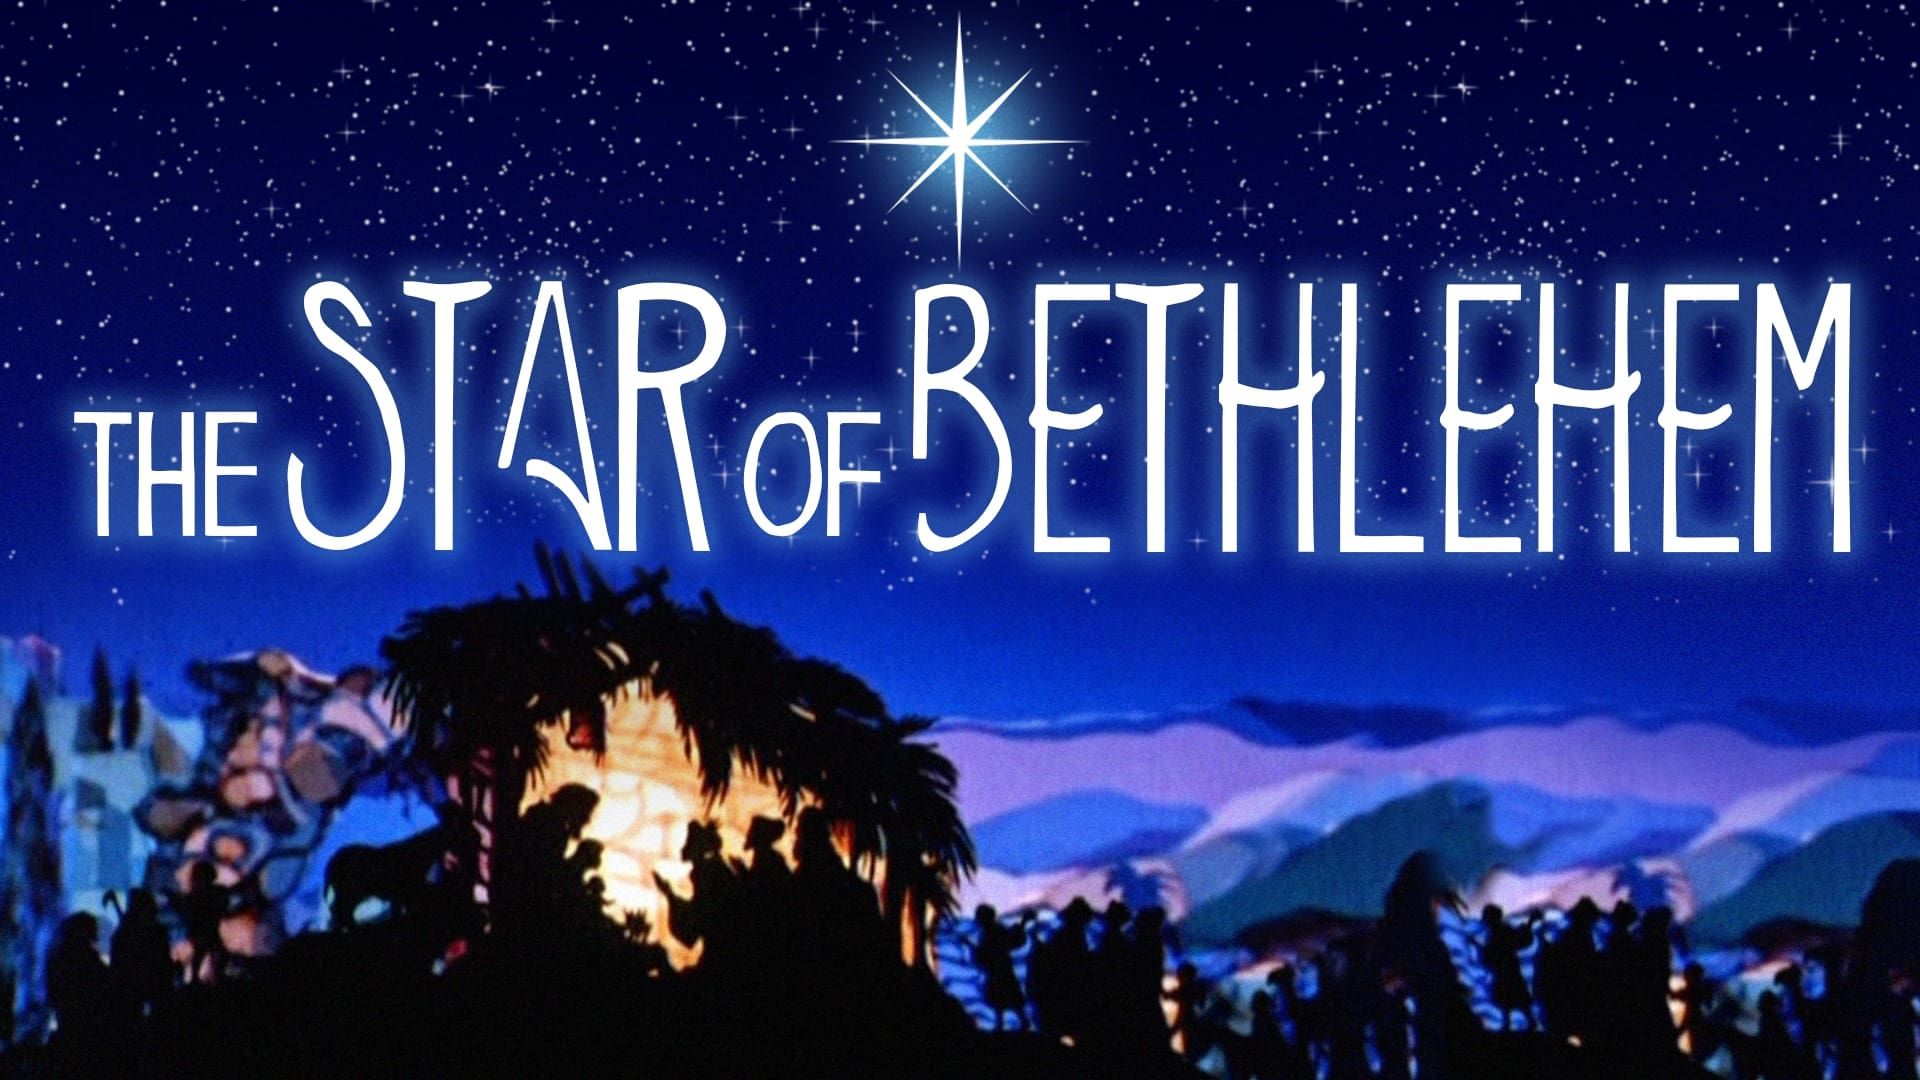 The Star of Bethlehem background